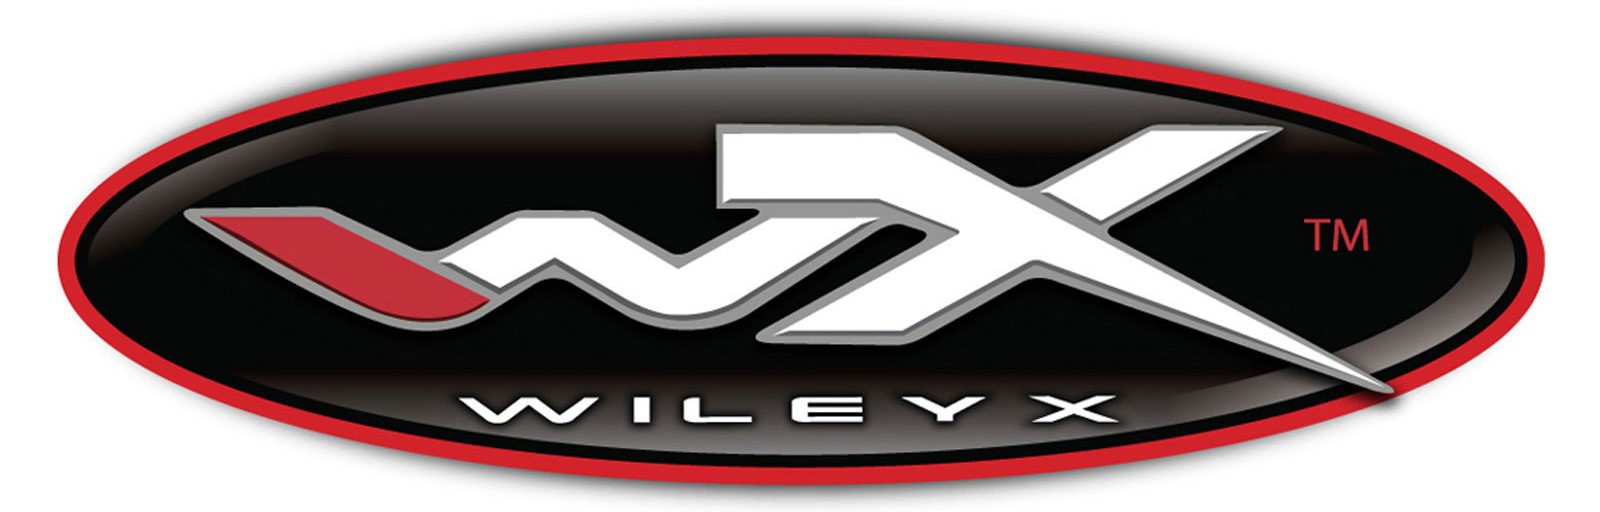 Wiley_X_Logo_5_19.jpg